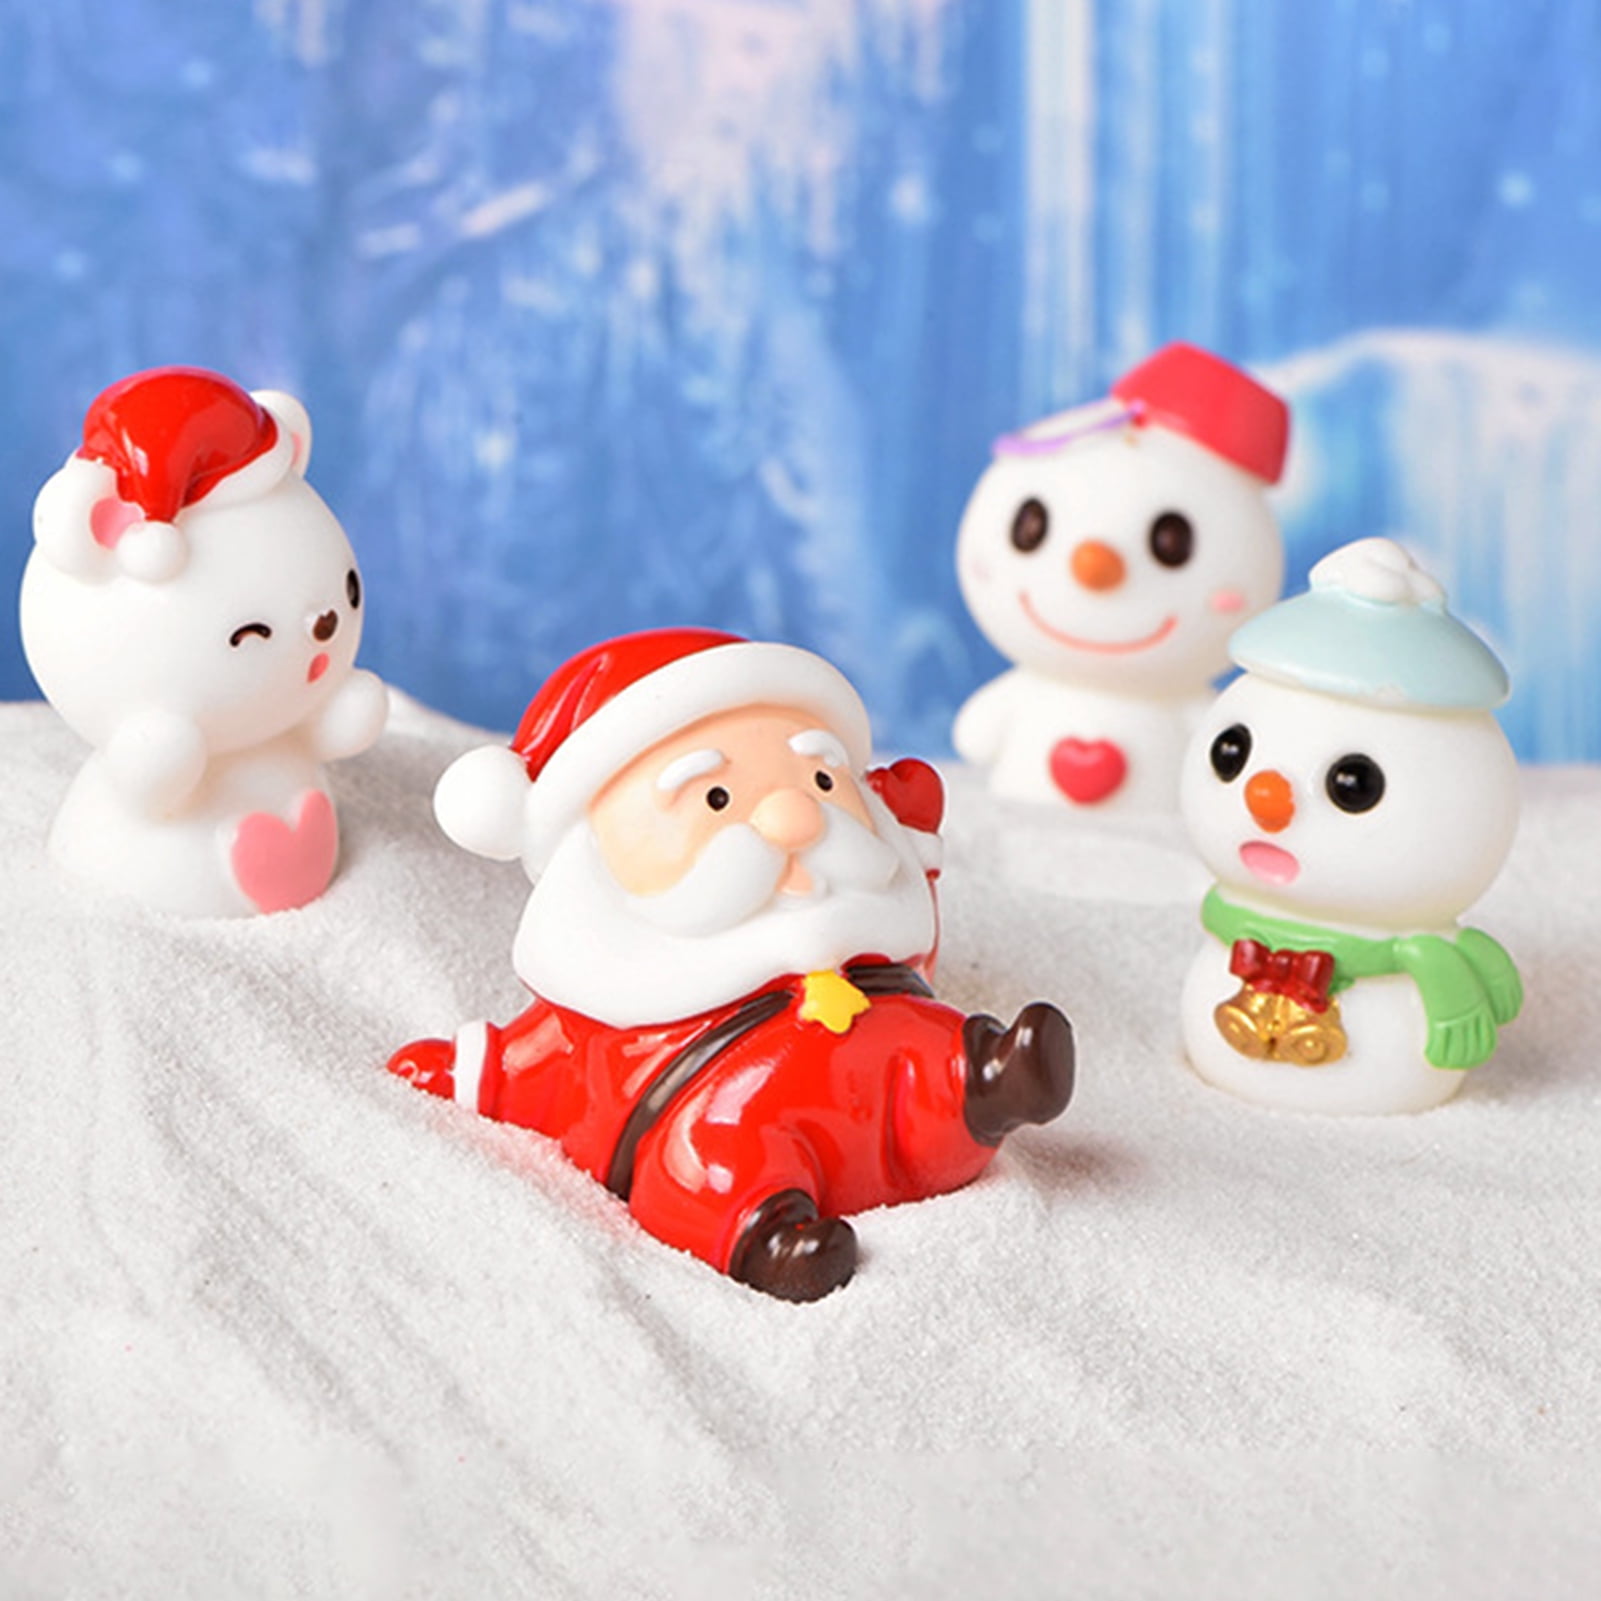 Decorative Objects & Figurines Christmas Miniature Ornaments Mini Crafts  Snowman Xmas Tree Santa Claus For Snow Globes Fairy Landscape Deskt From  Dxnb118, $28.21